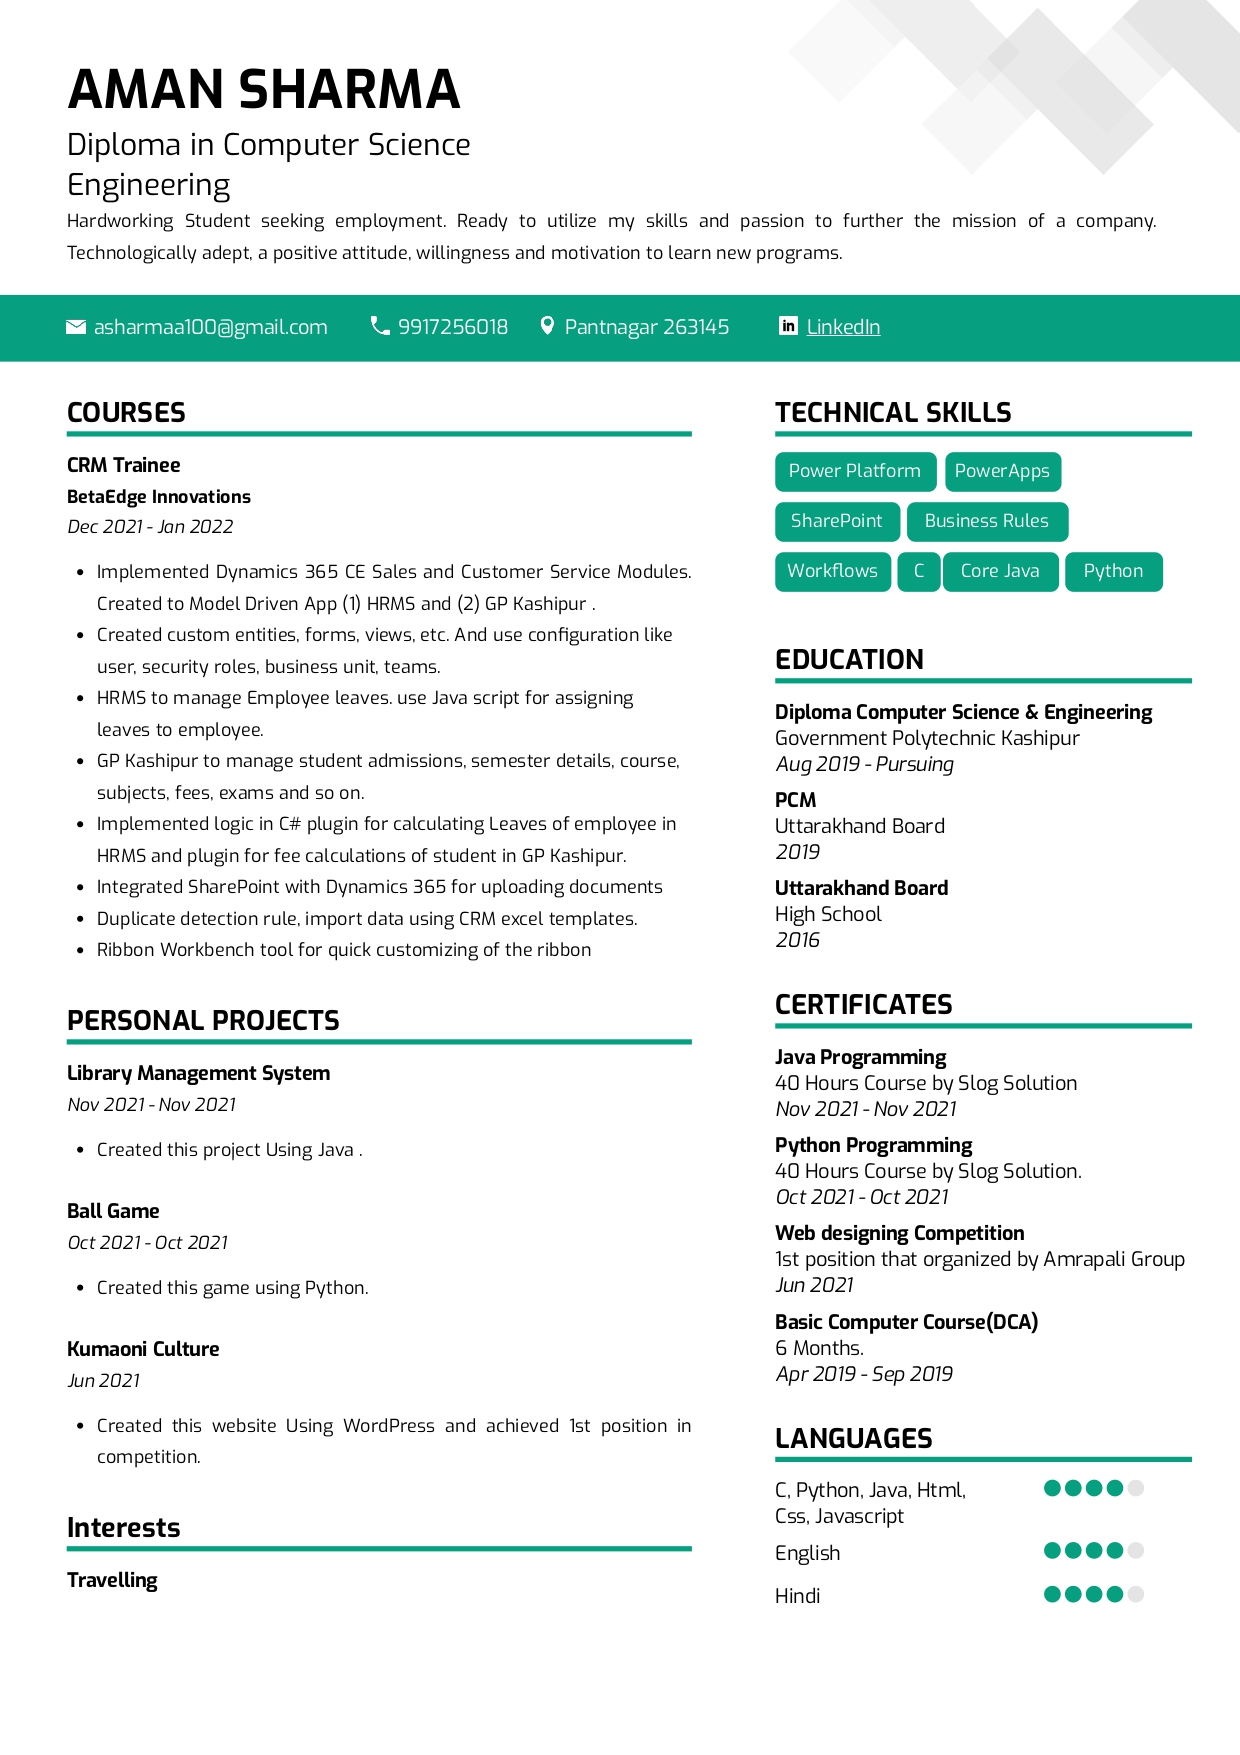 Resume of Computer Science Engineering Graduate